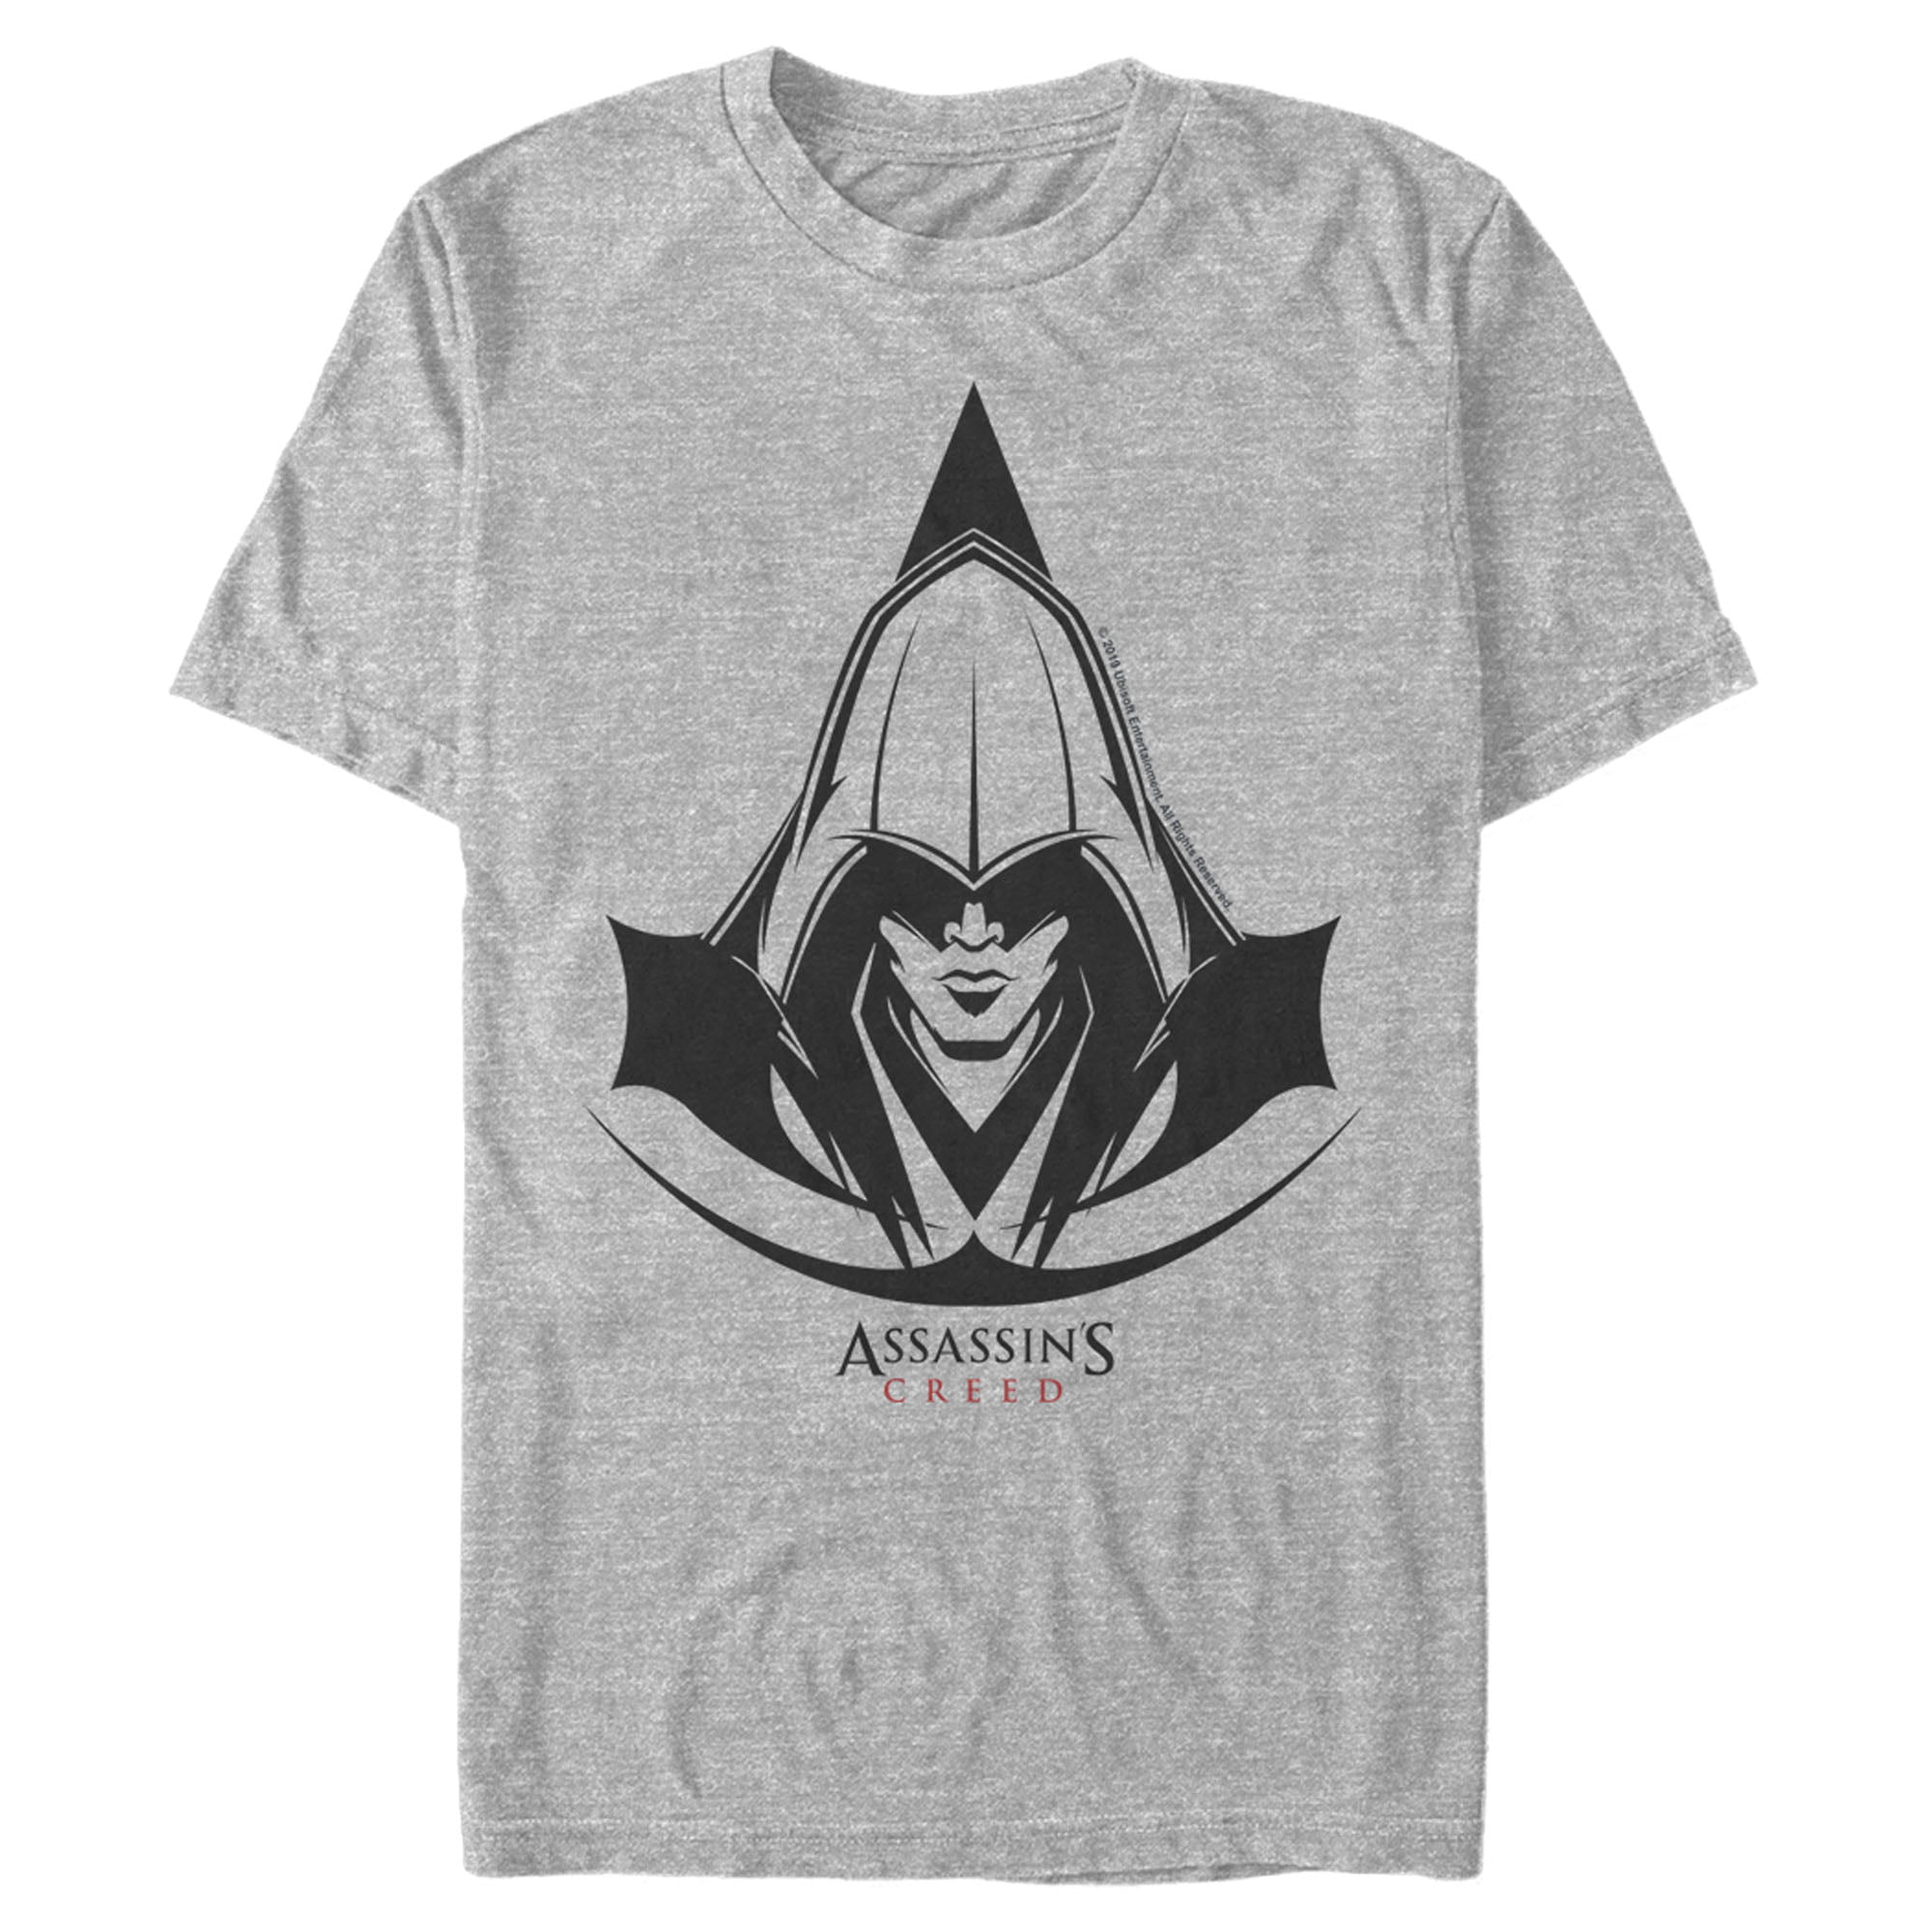 American Brotherhood of Assassins Red Logo Creed Gamer Black T-shirt